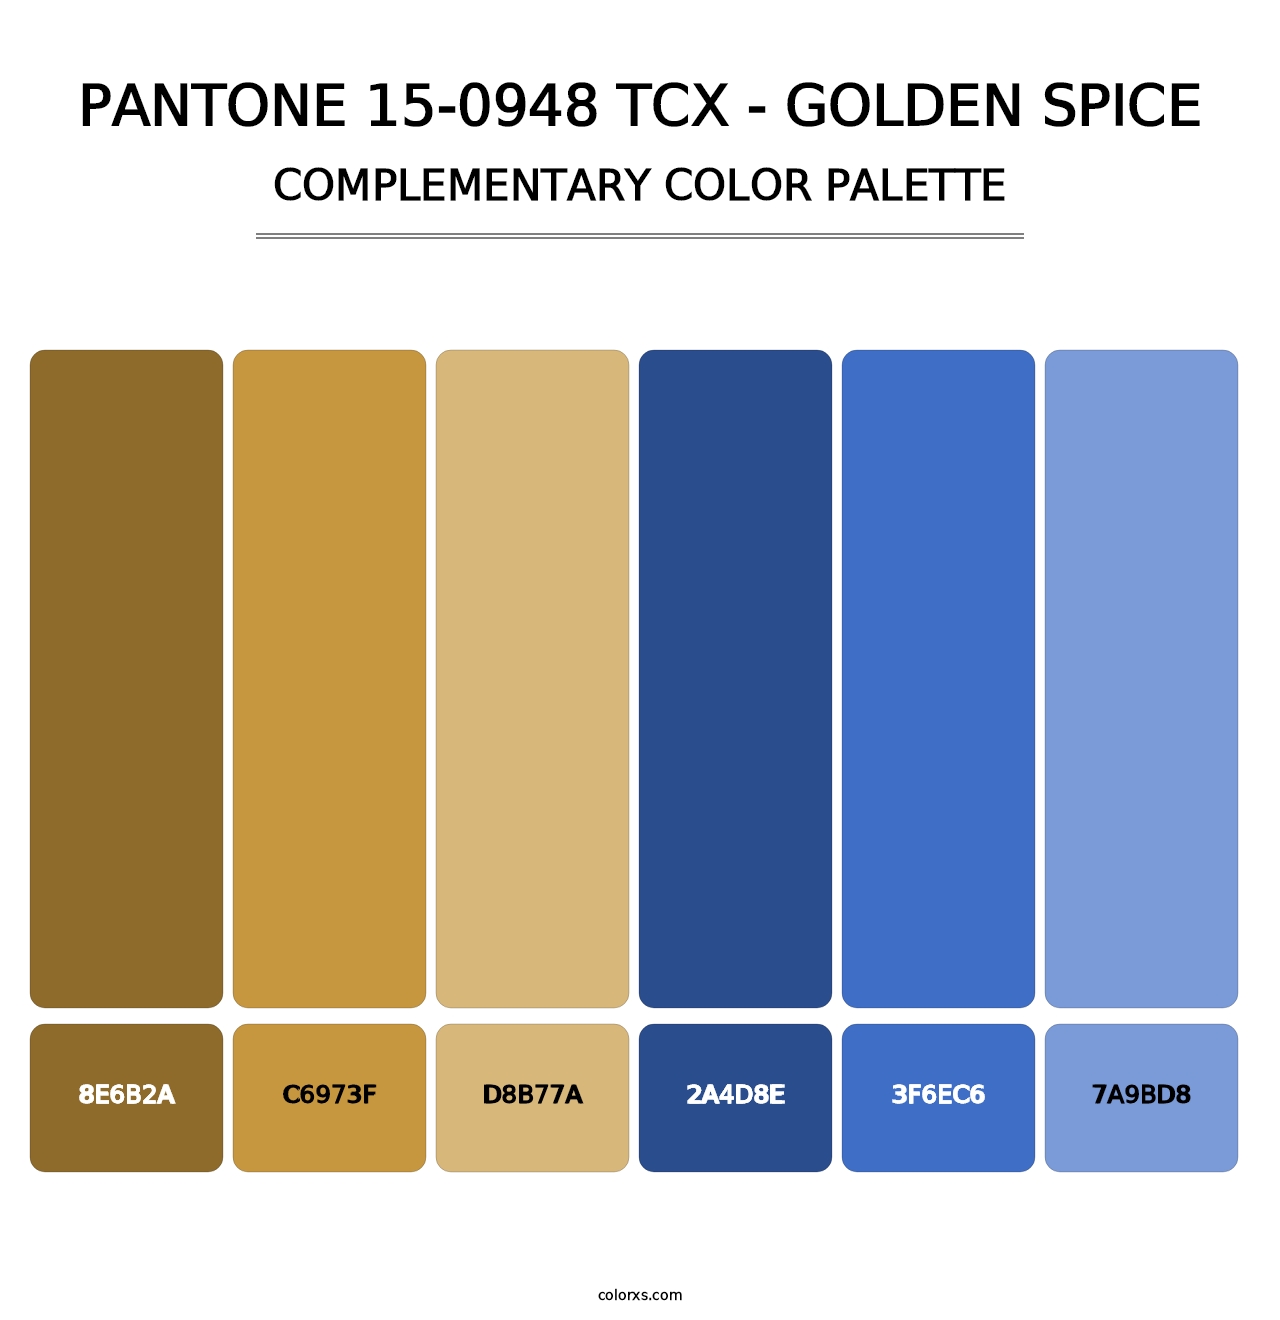 PANTONE 15-0948 TCX - Golden Spice - Complementary Color Palette